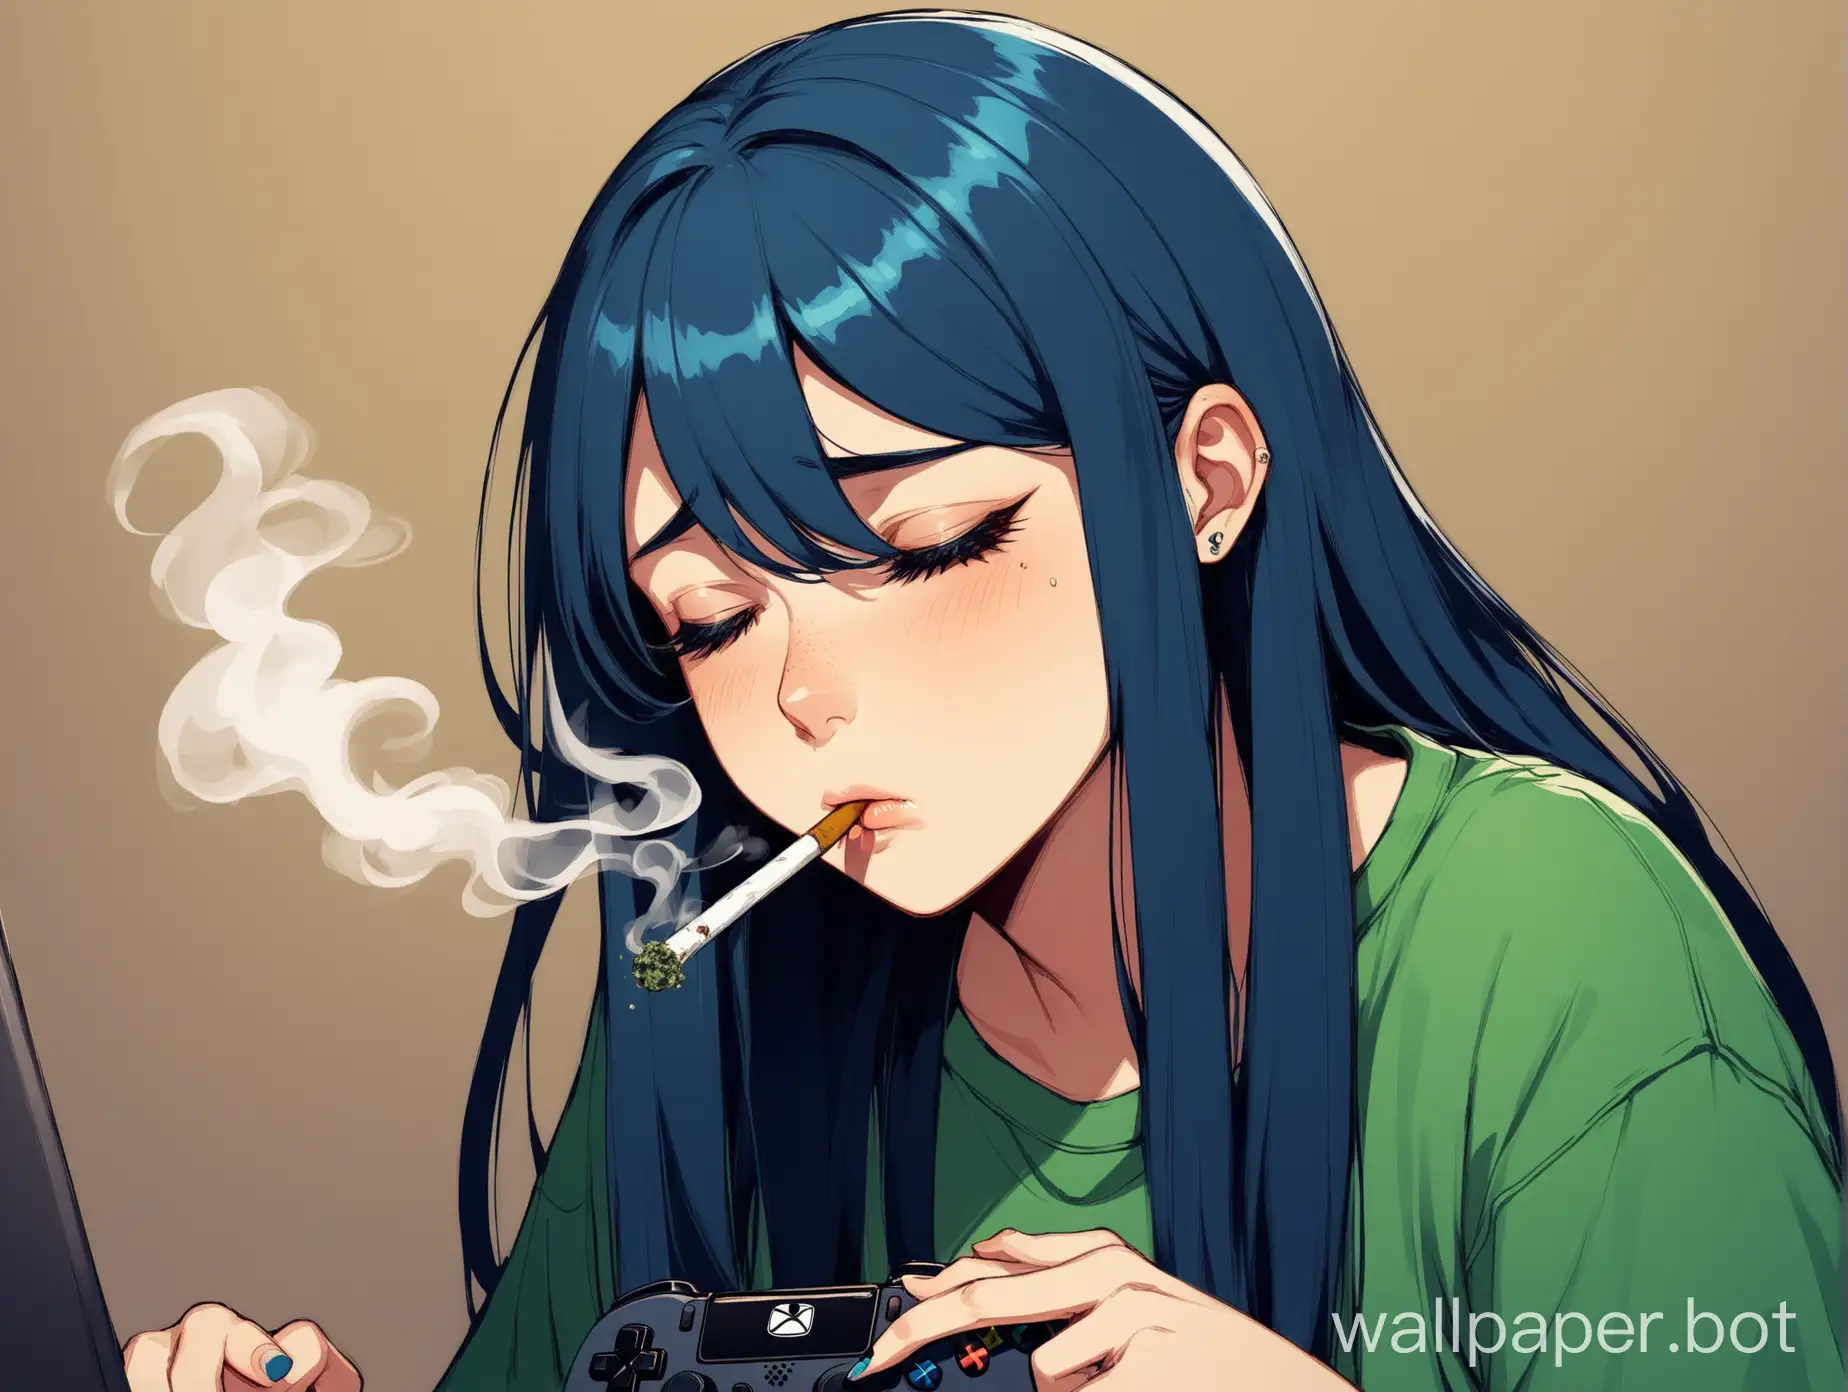 exhausted stoner gamer girl with long dark blue hair smoking weed